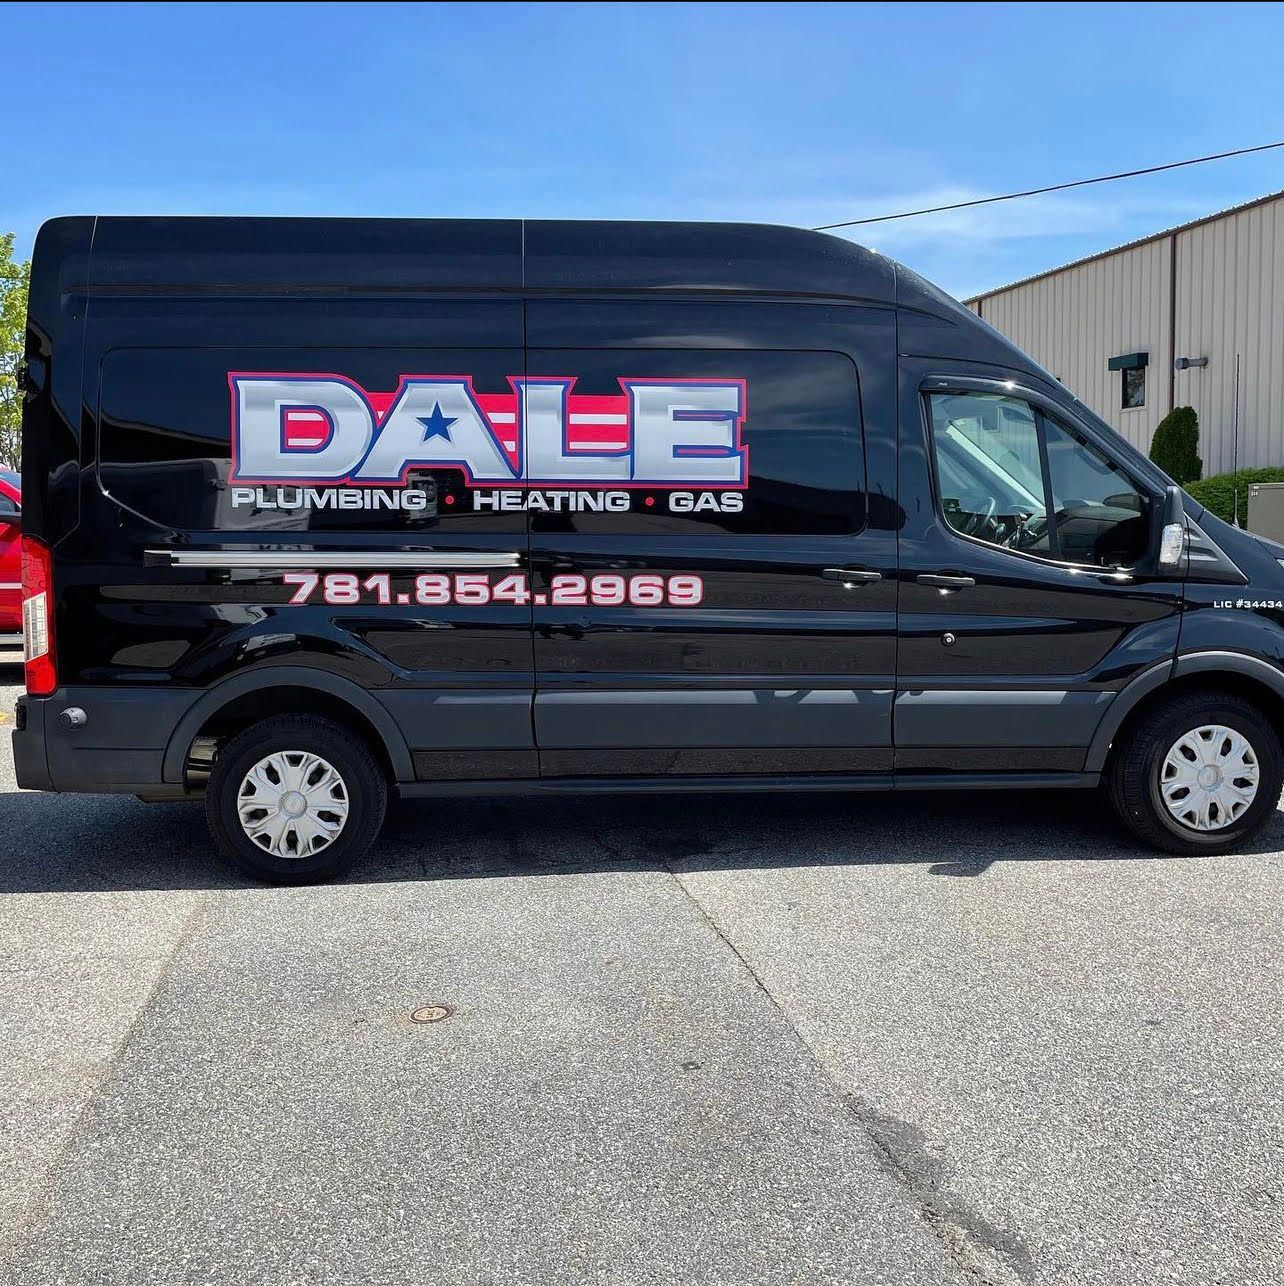 Dale Plumbing service van ready to serve in  Massachusetts Regions